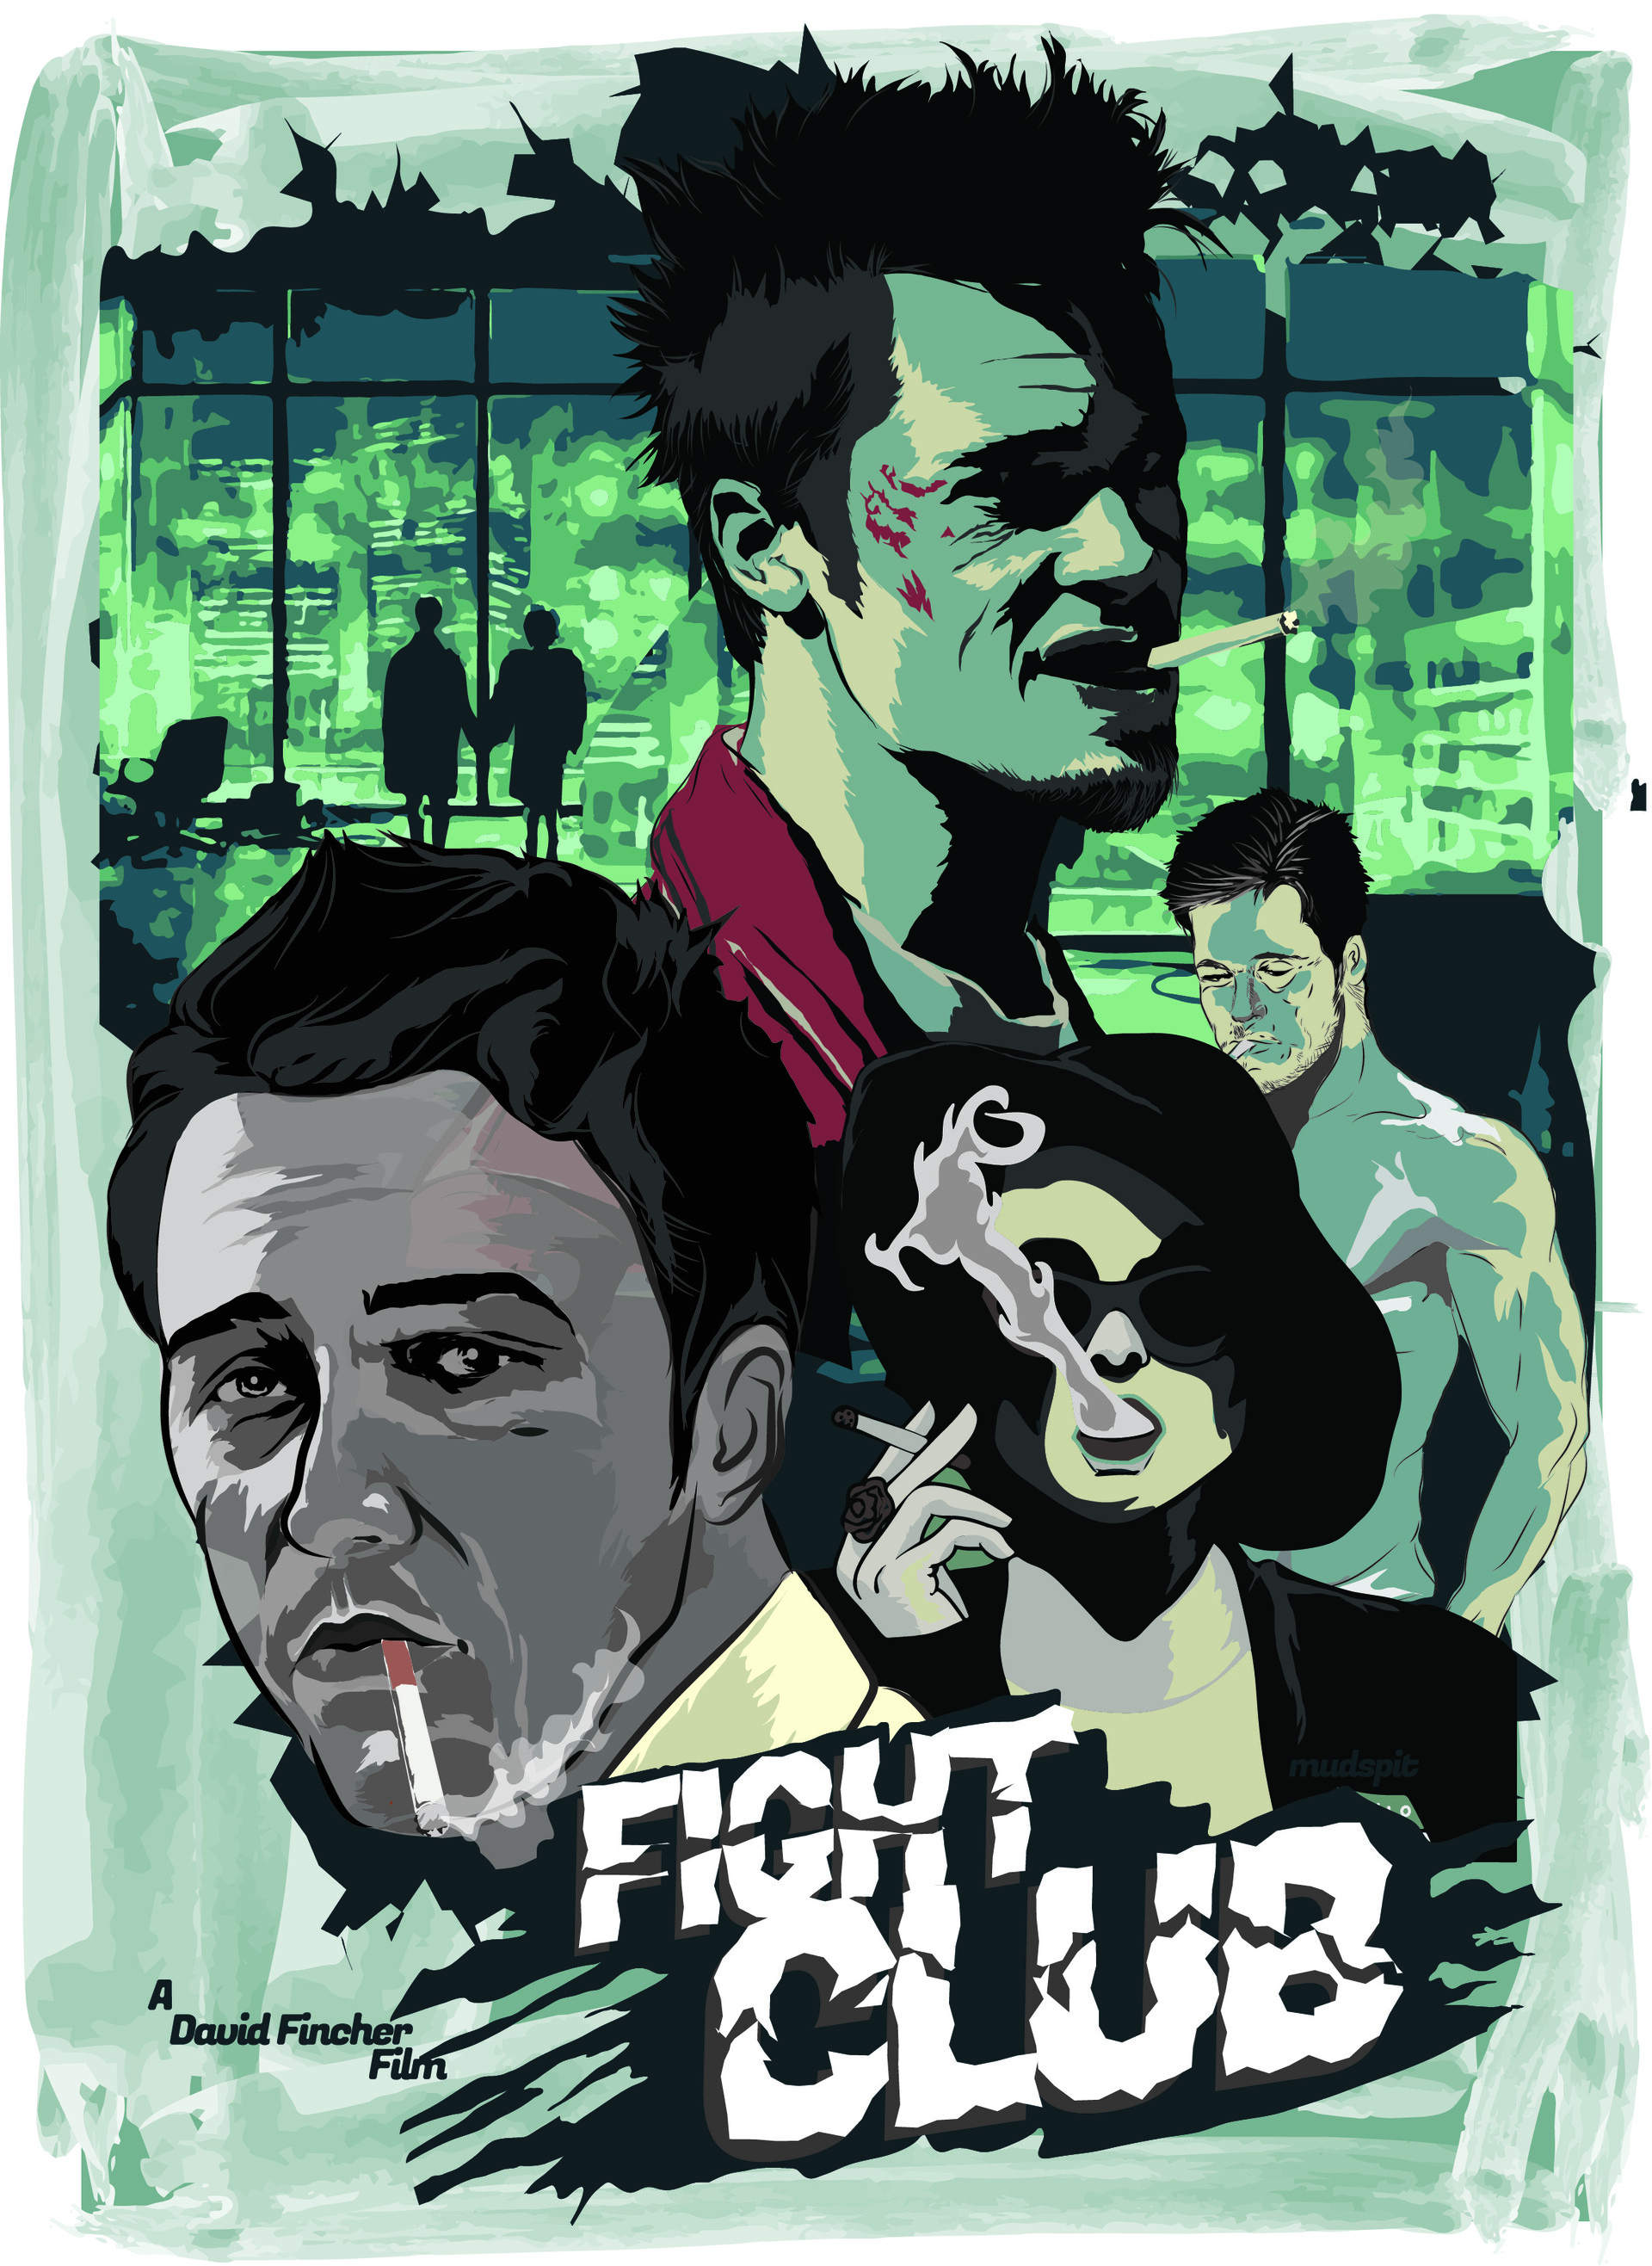 ArtStation - Fight Club movie poster